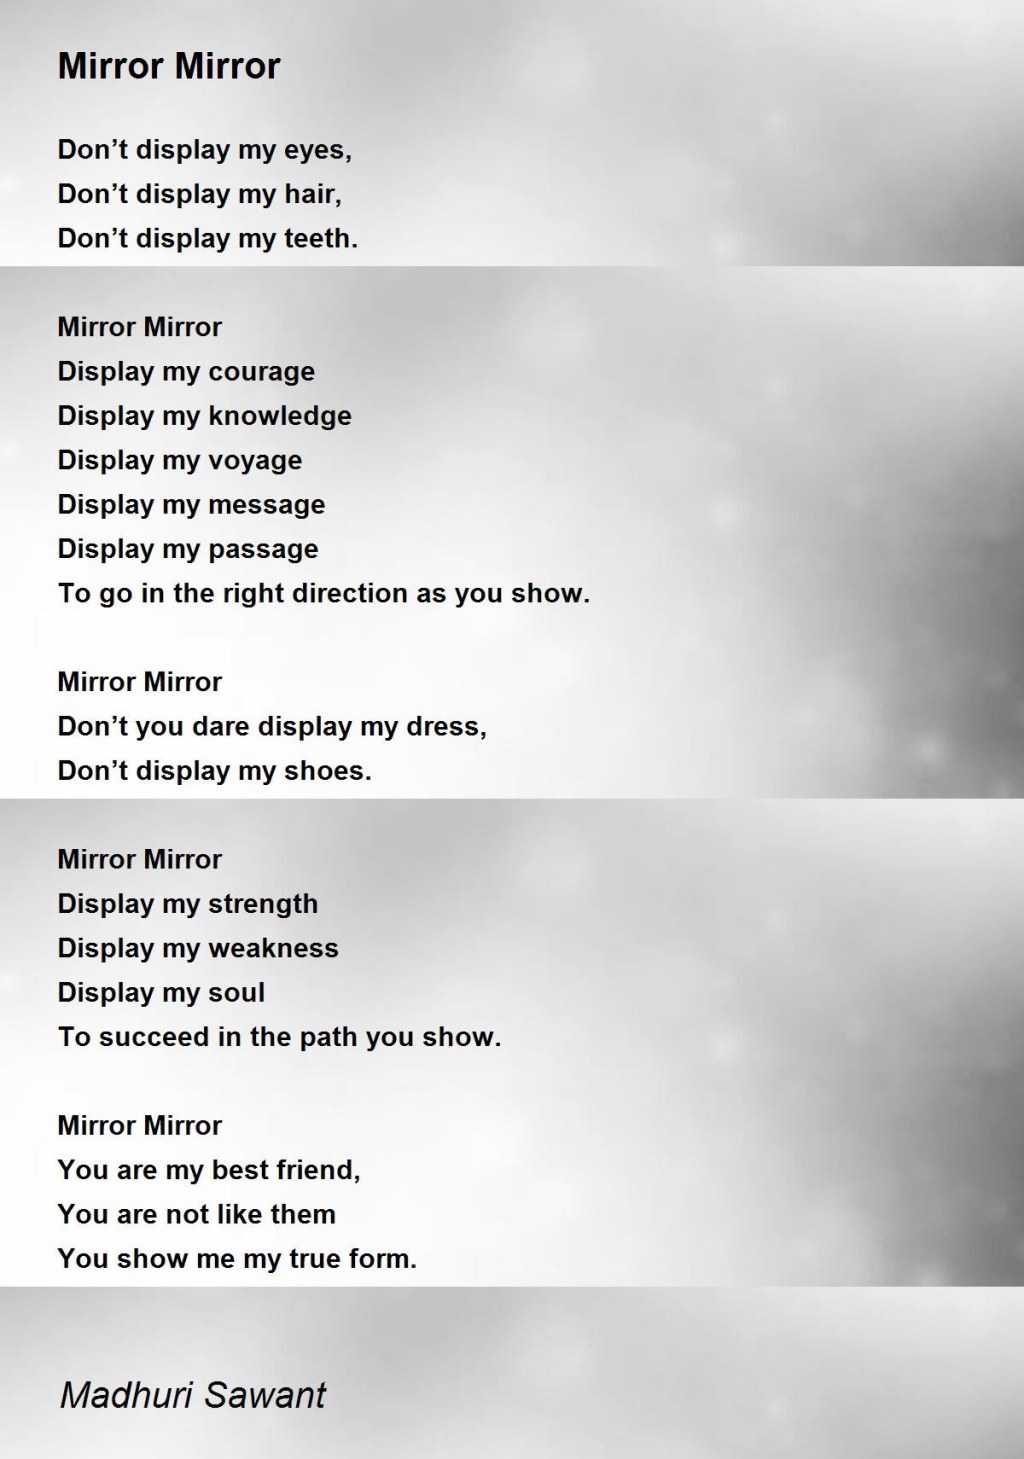 Picture of: Mirror Mirror – Mirror Mirror Poem by Madhuri Sawant